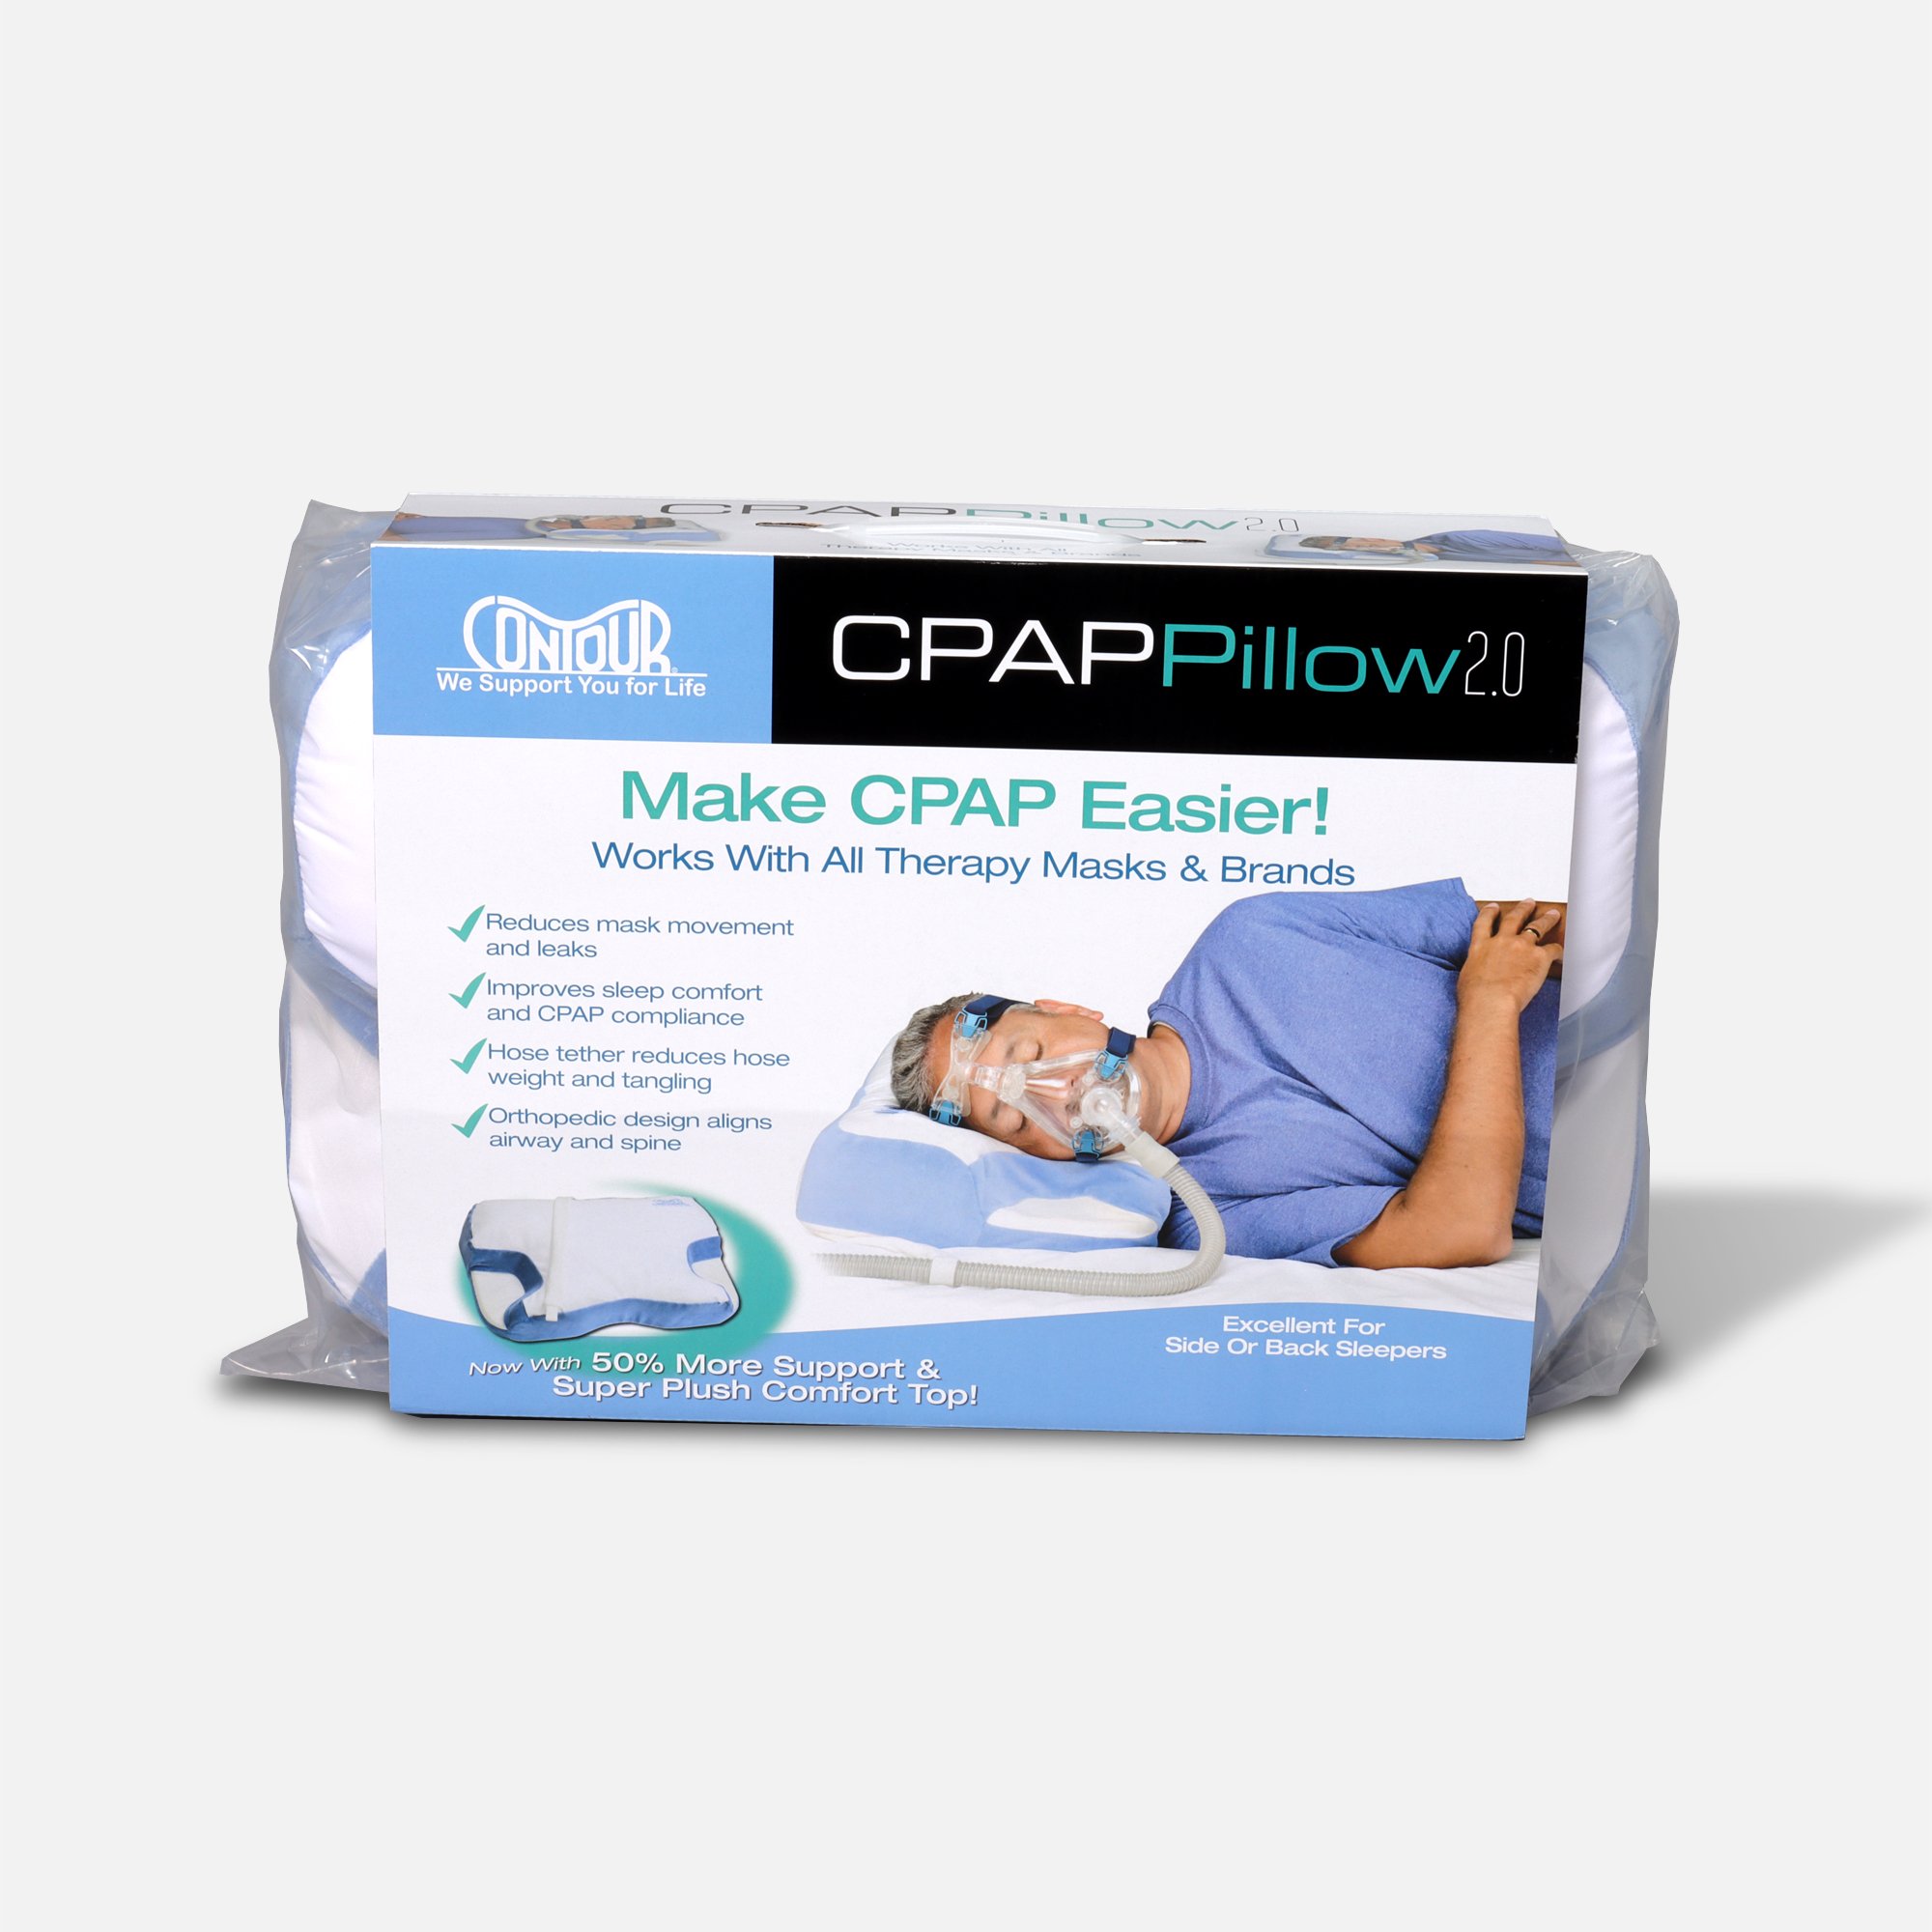 Use FSA Dollars on Contour CPAP Accessories - Contour Living